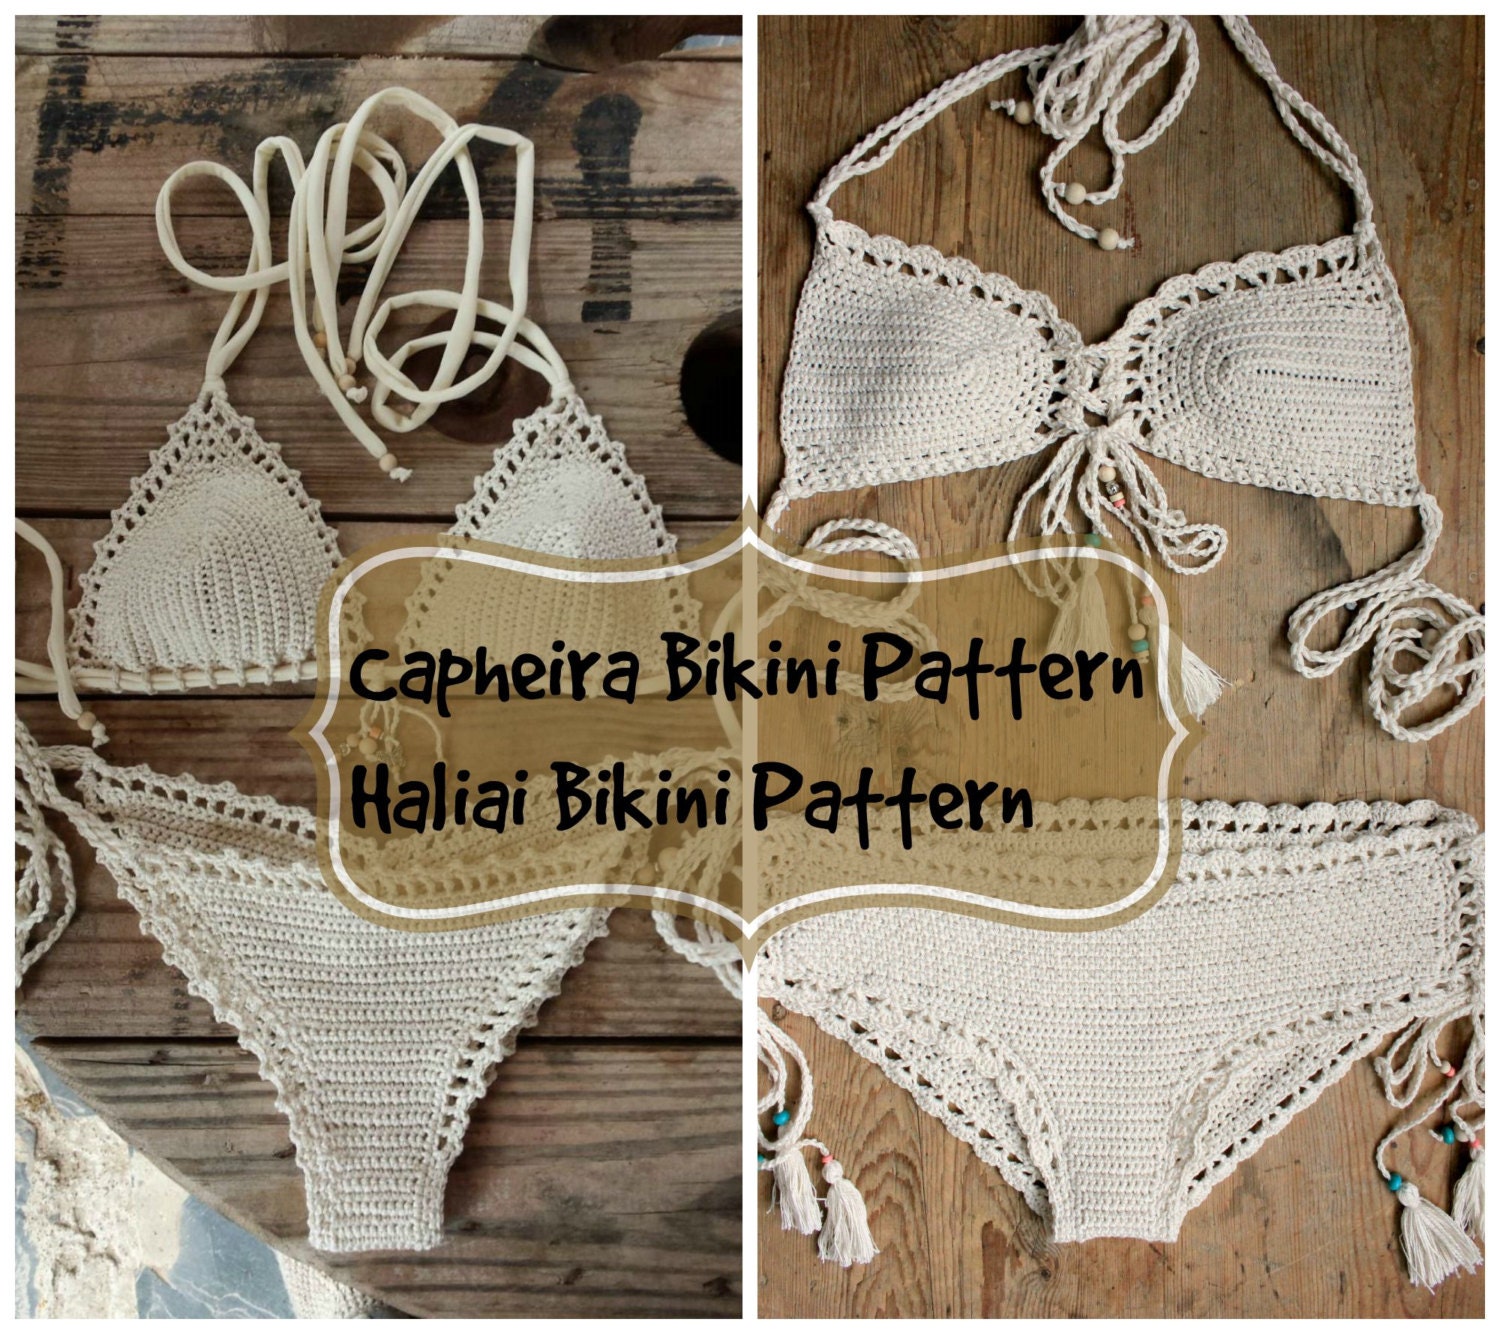 2 PDF Crochet PATTERNS Capheira Bikini Pattern by CapitanaUncino